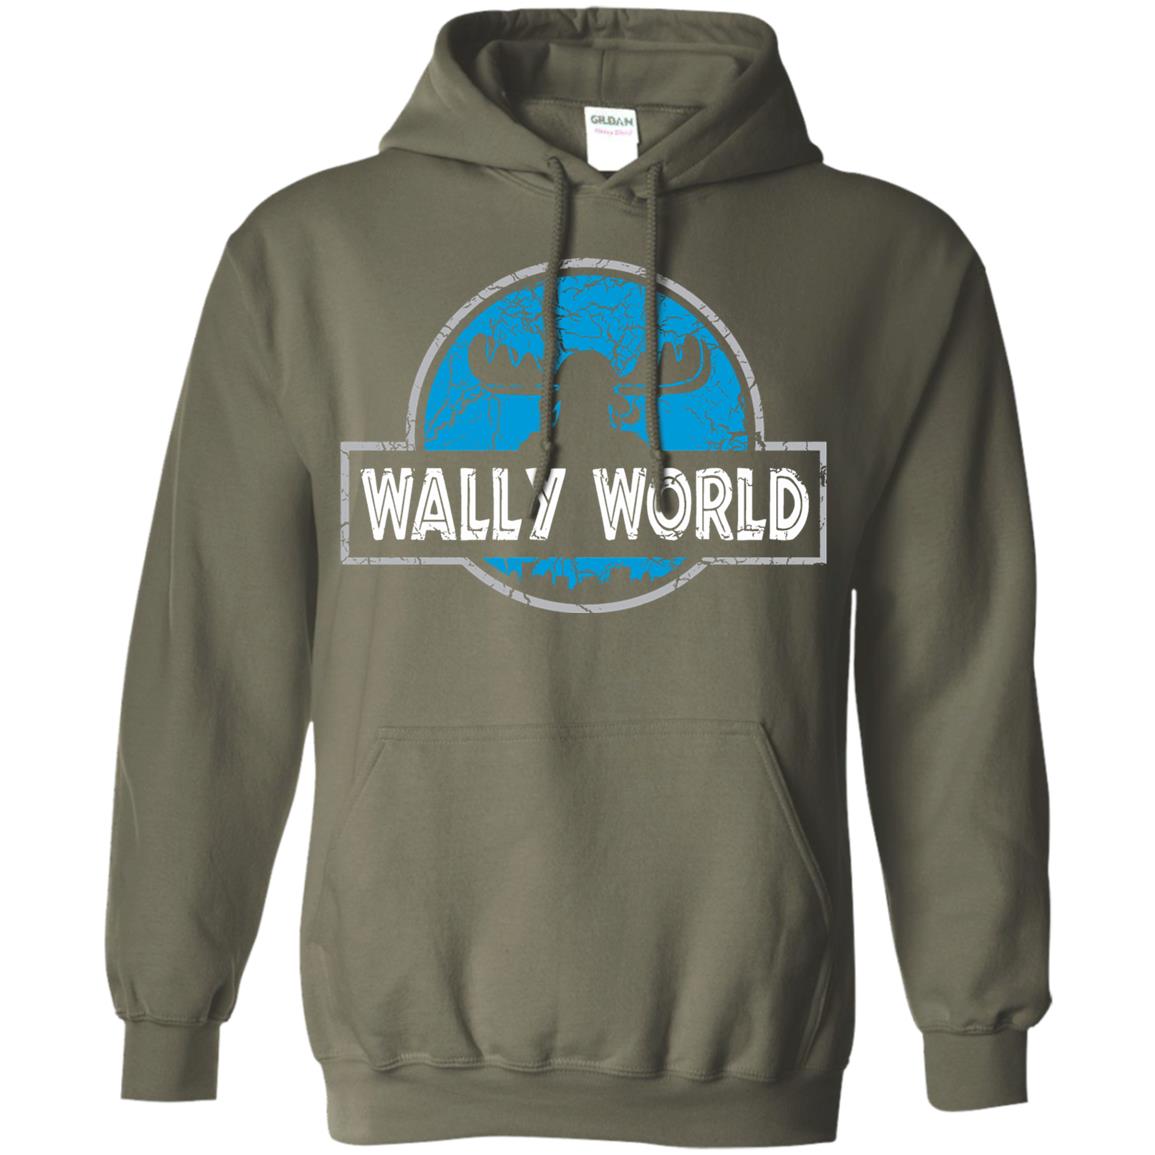 wally world hoodie - military green